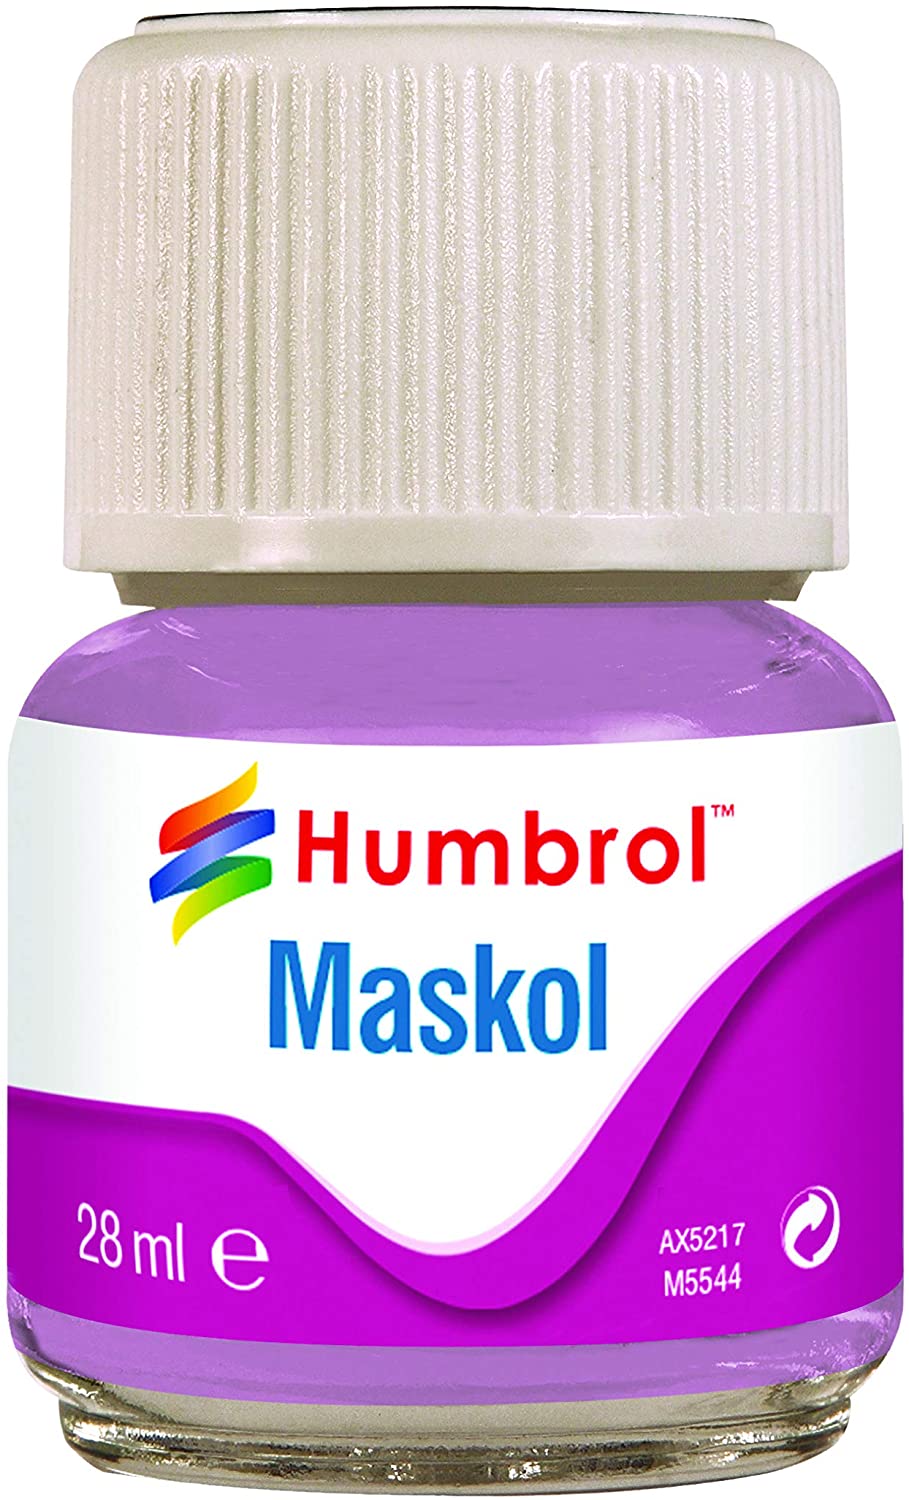 Humbrol 28ml Maskol Bottle